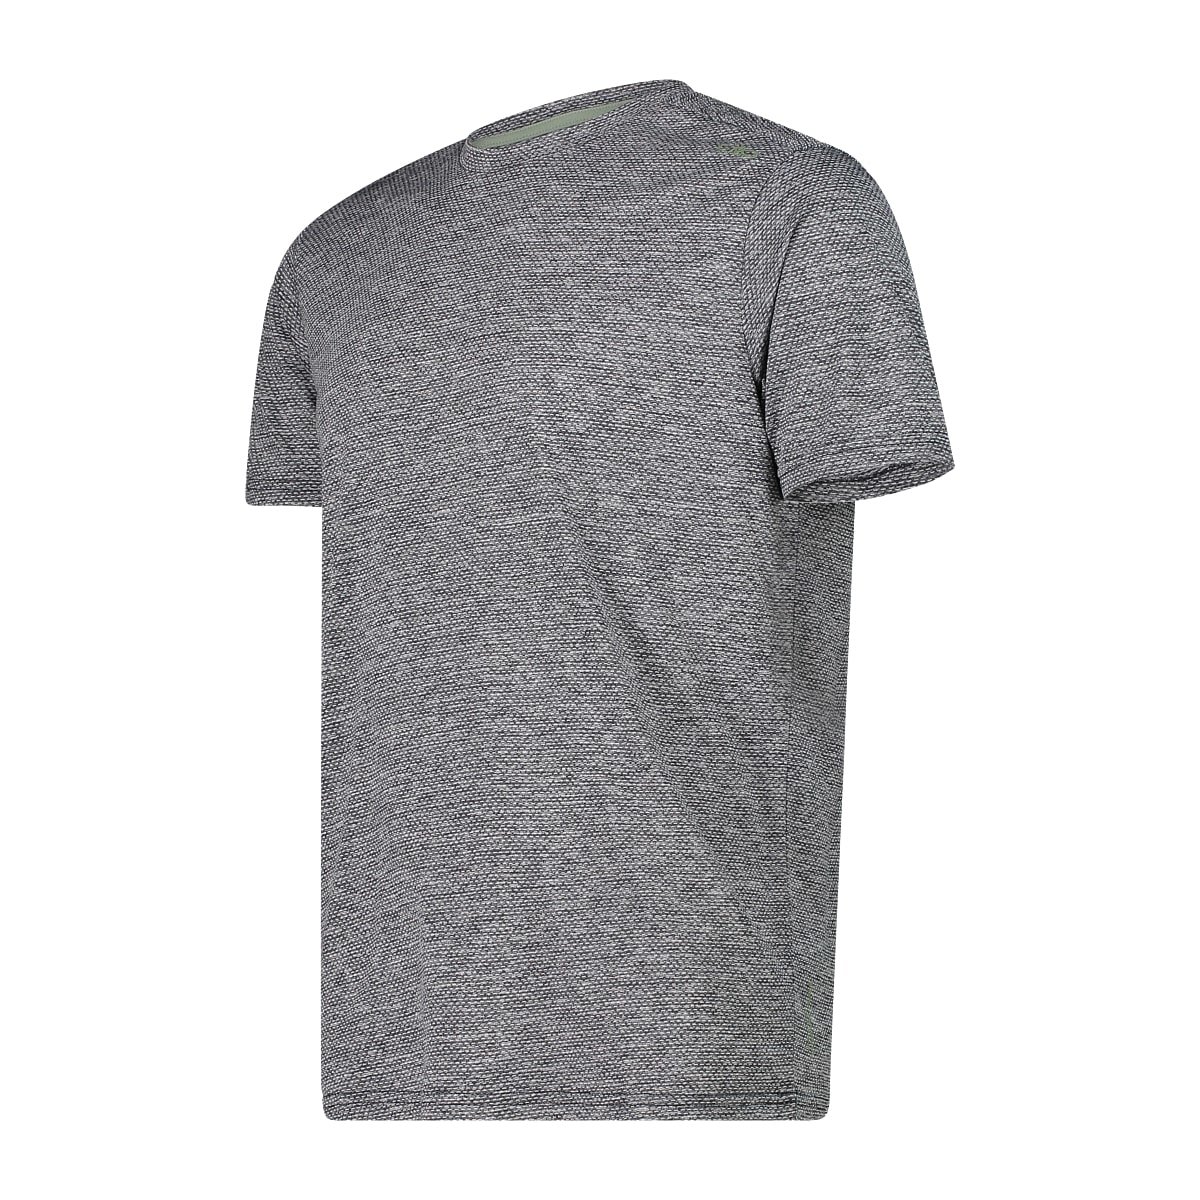 CMP Herren T-Shirt Short Sleeve Shirt  31T5887 antracite